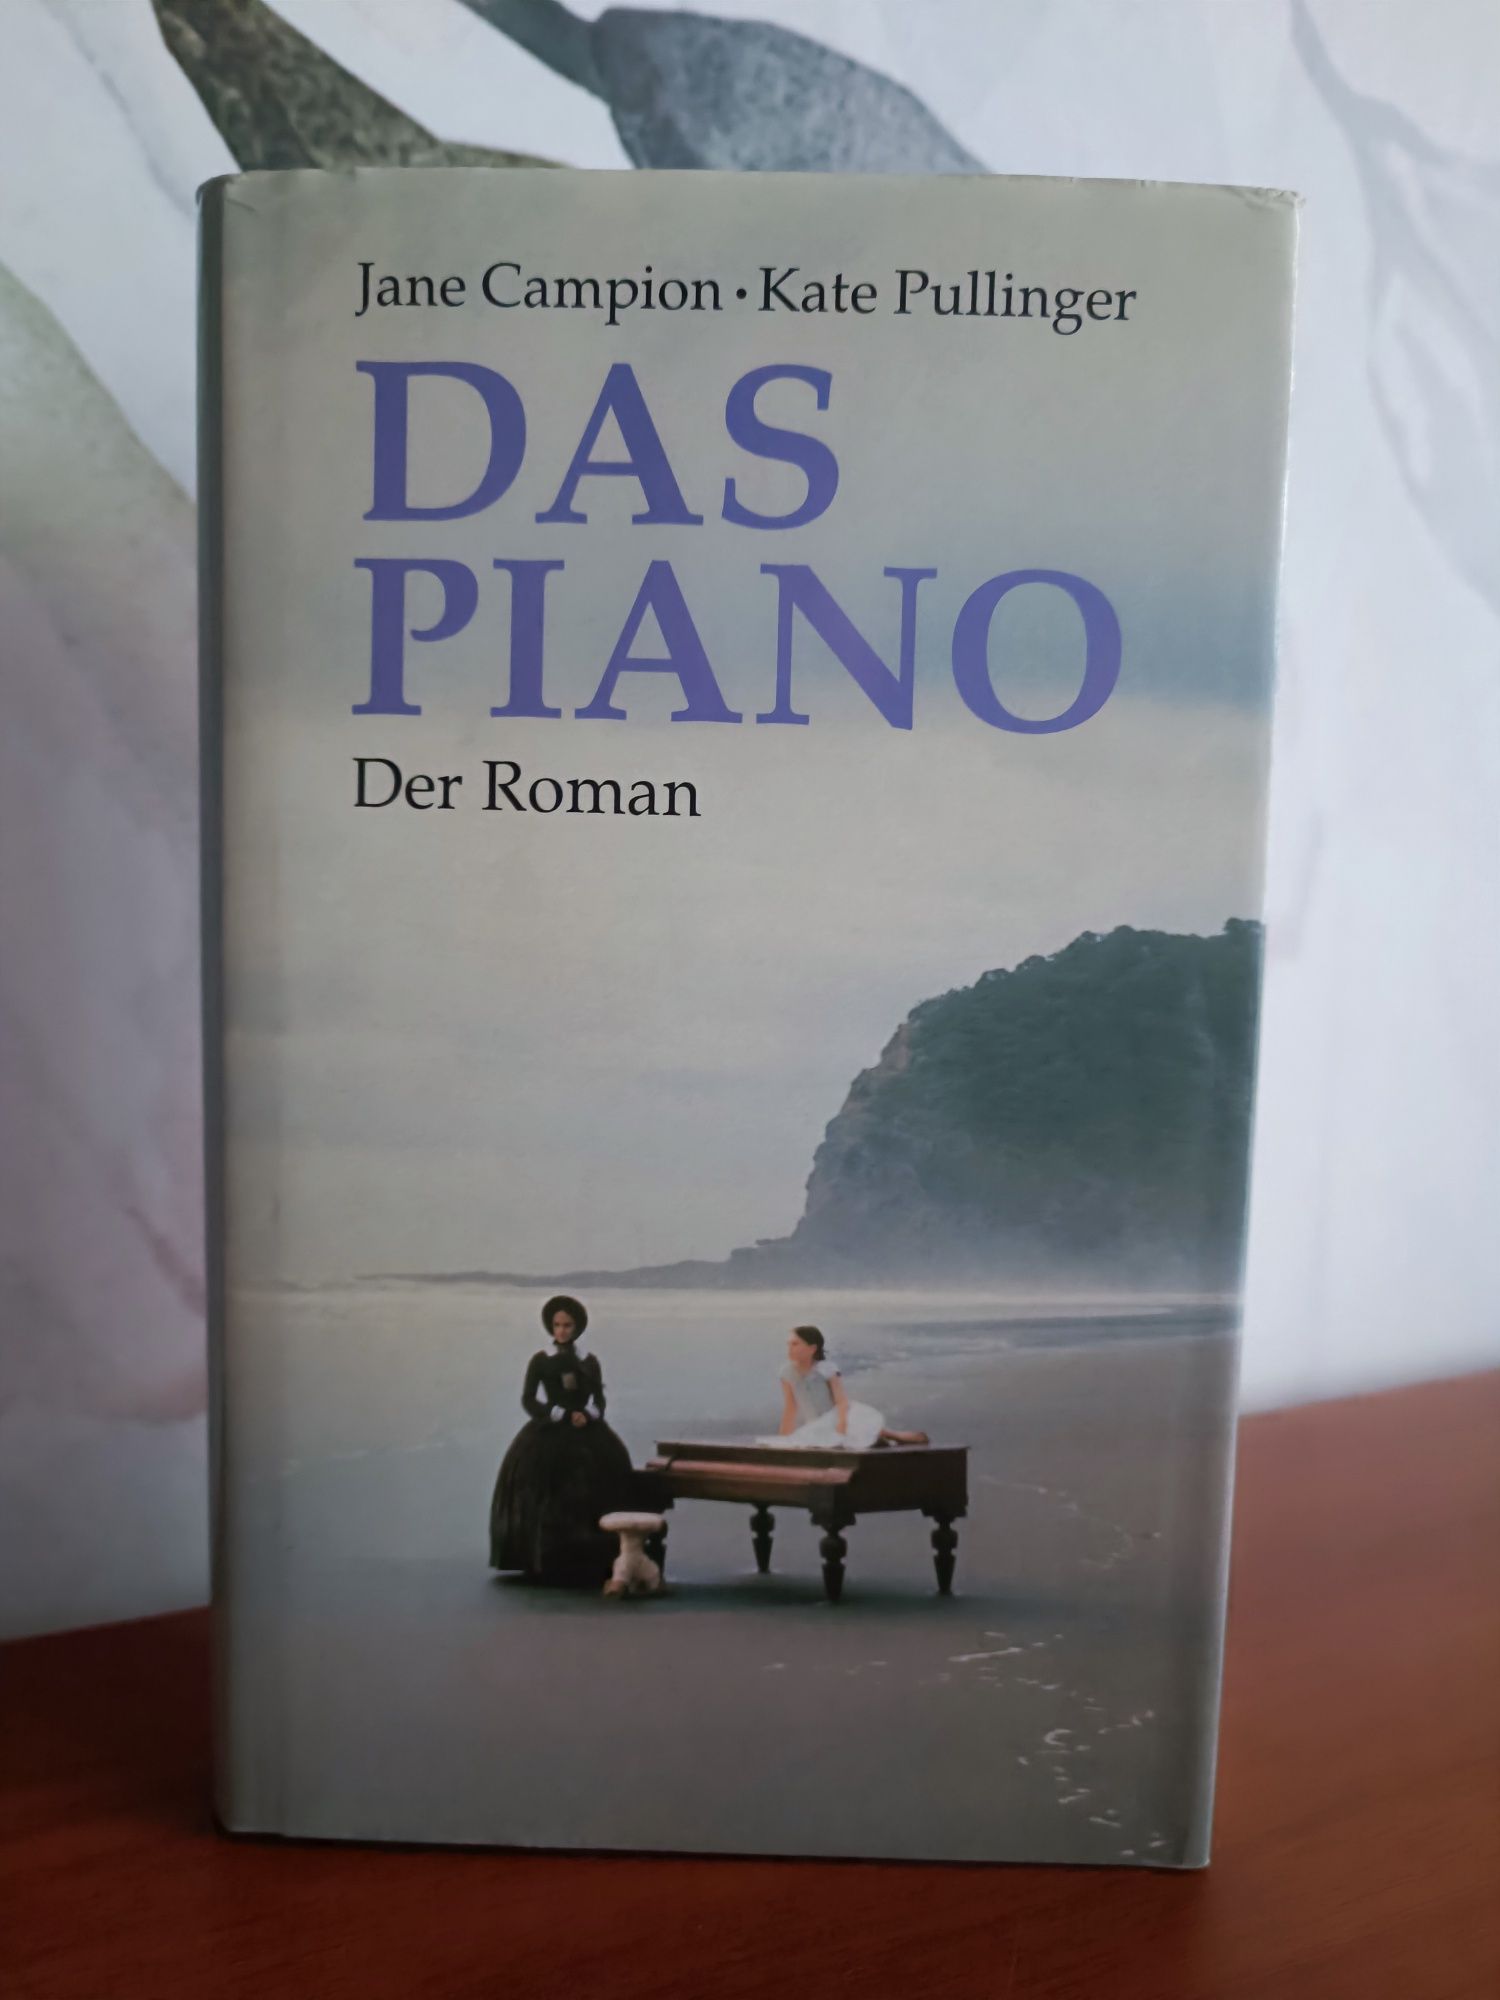 Książka Jane Campion i Kate Pullinger "Pianino" po Niemiecku